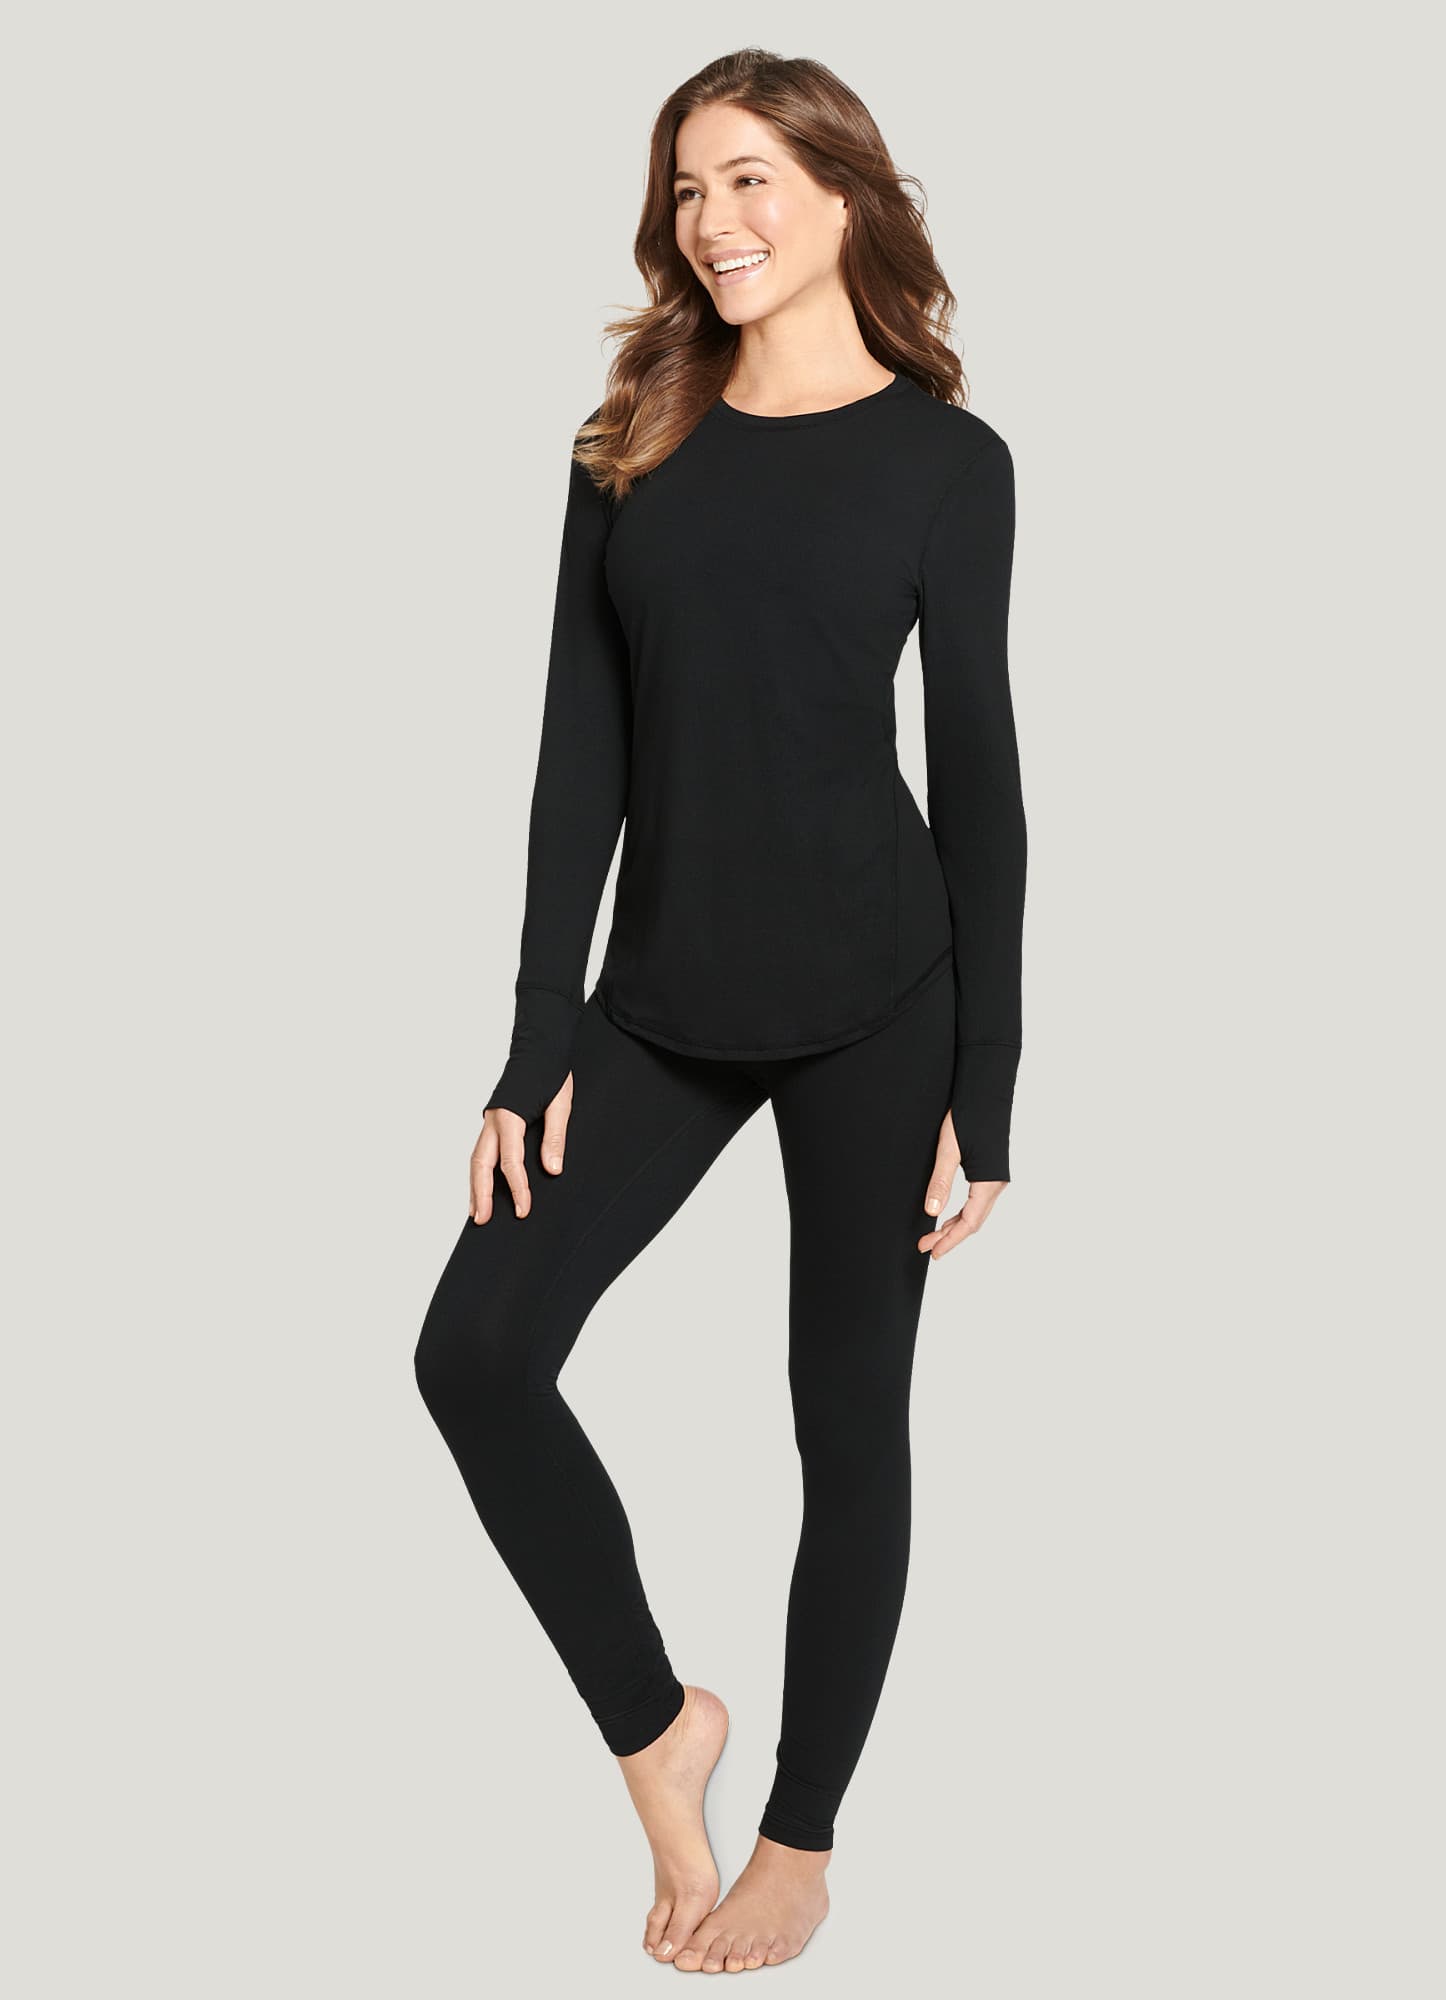 Jockey® Women's Blended Size Basic Stretch Knit Legging Black Size: XS/S |  eBay